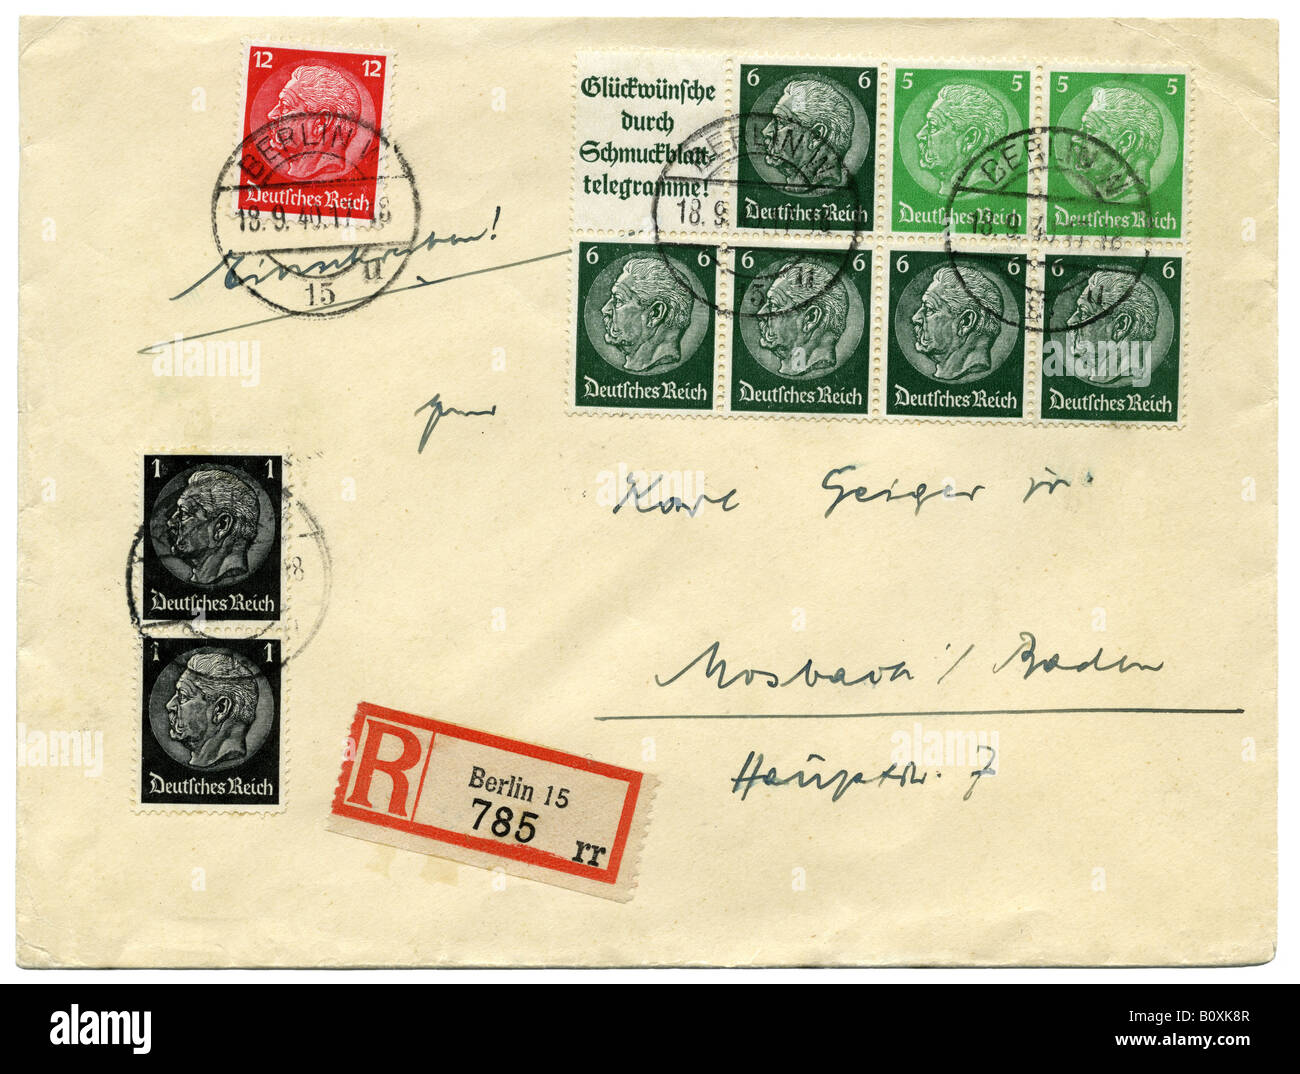 Germany Deutsches Reich Hindenburg stamps on Registered letter, postmarked Berlin, 1940. Stock Photo